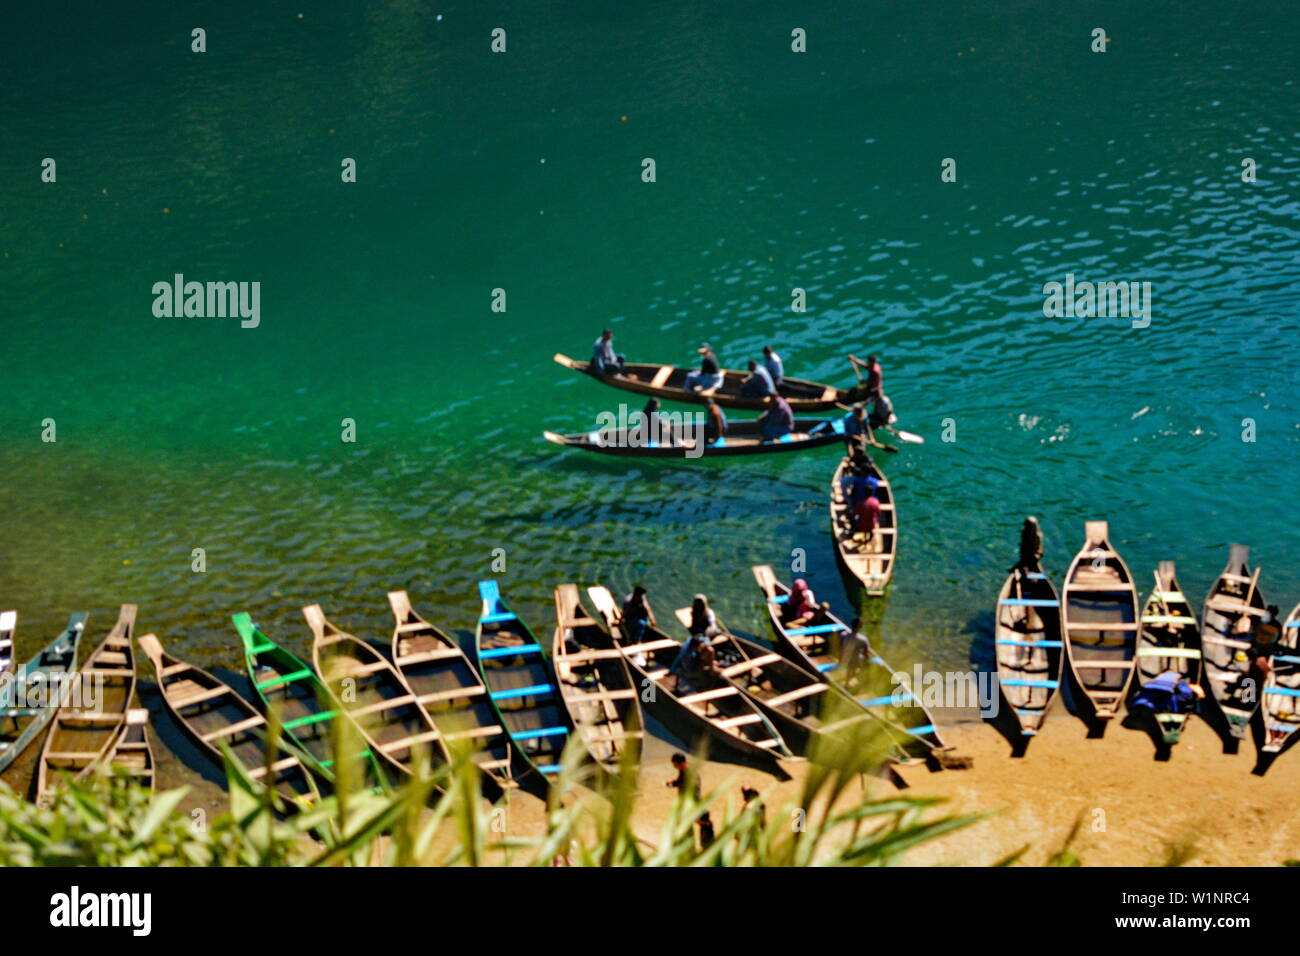 Dawki River, Meghalaya, India, Travel, Tourism, Northeast India, Crystal Clear Water, Umngot River, Boating, River Cruises, Adventure, Scenic Beauty Stock Photo